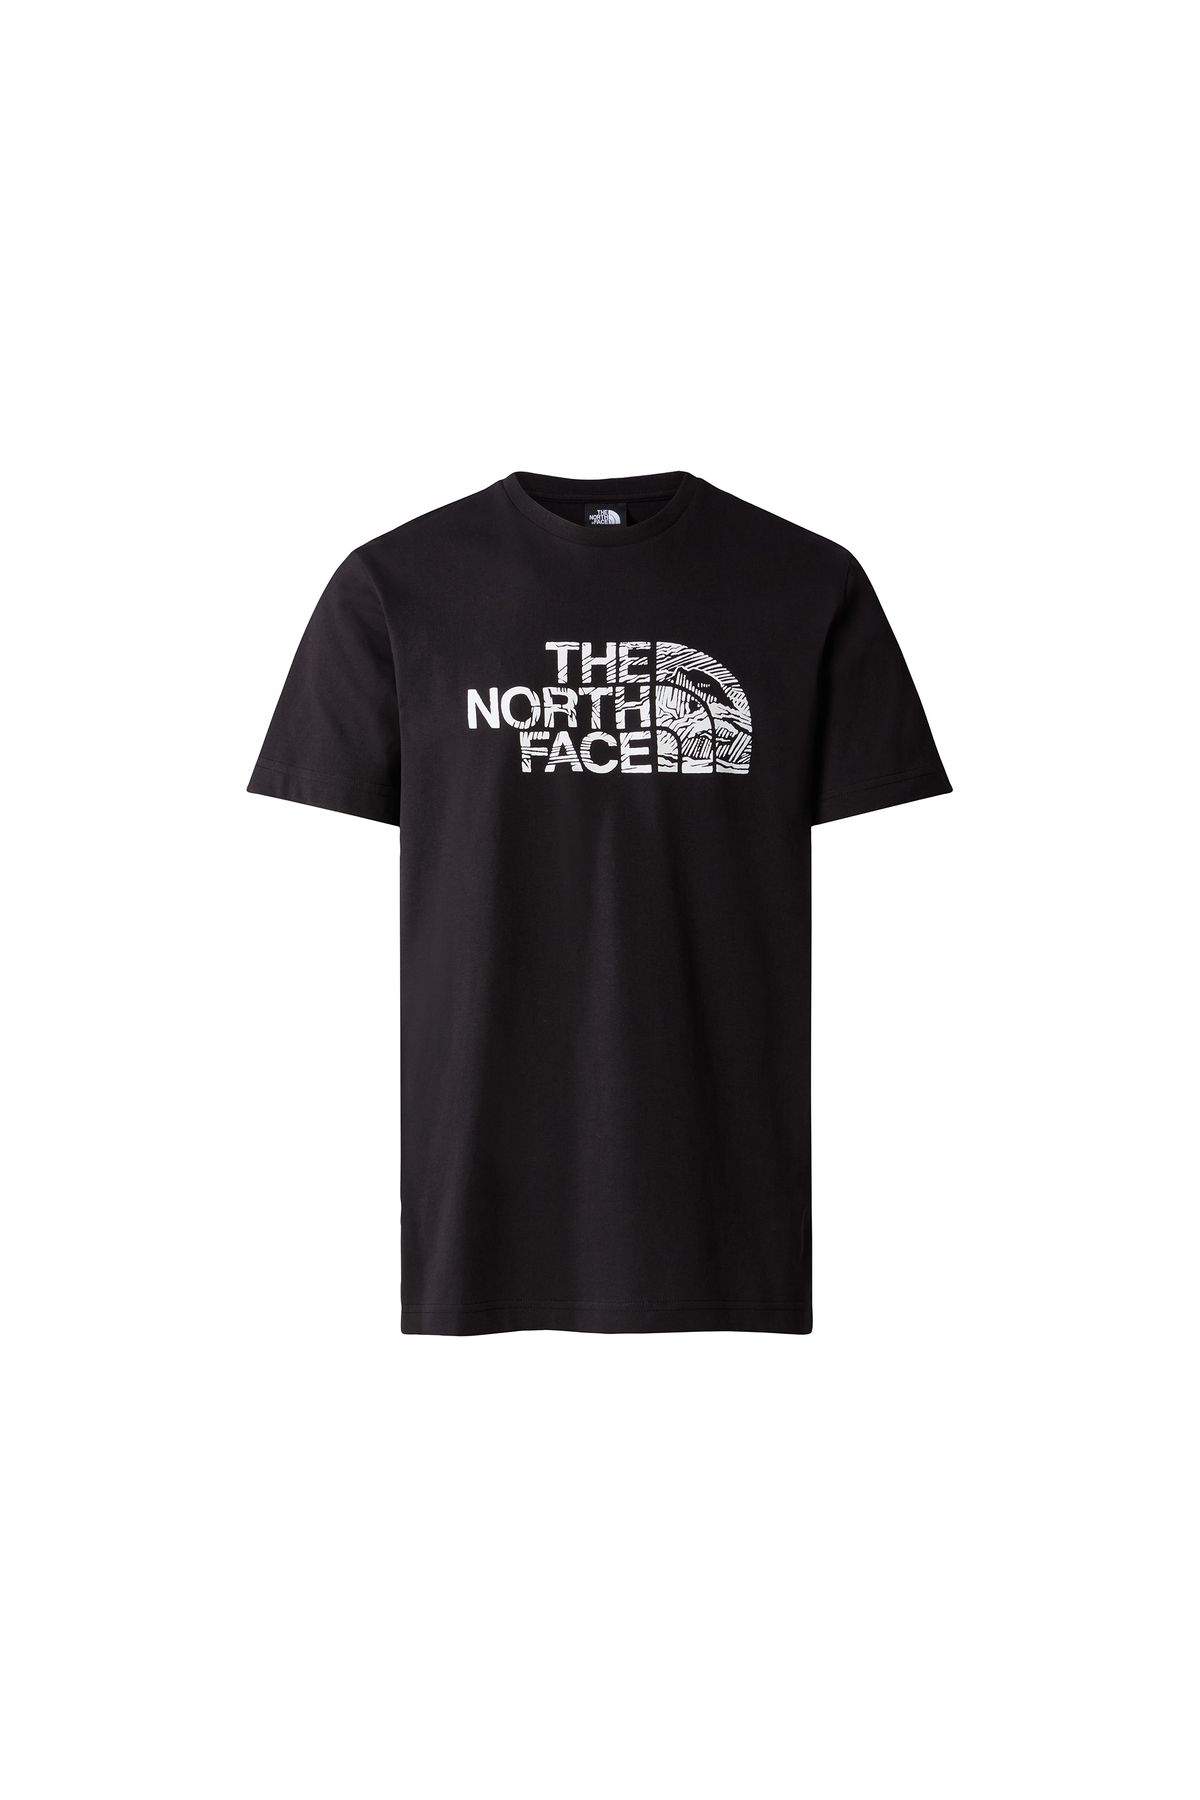 The North Face M S/S Wooscut Dome Tee Tişört Erkek Günlük T-shirt